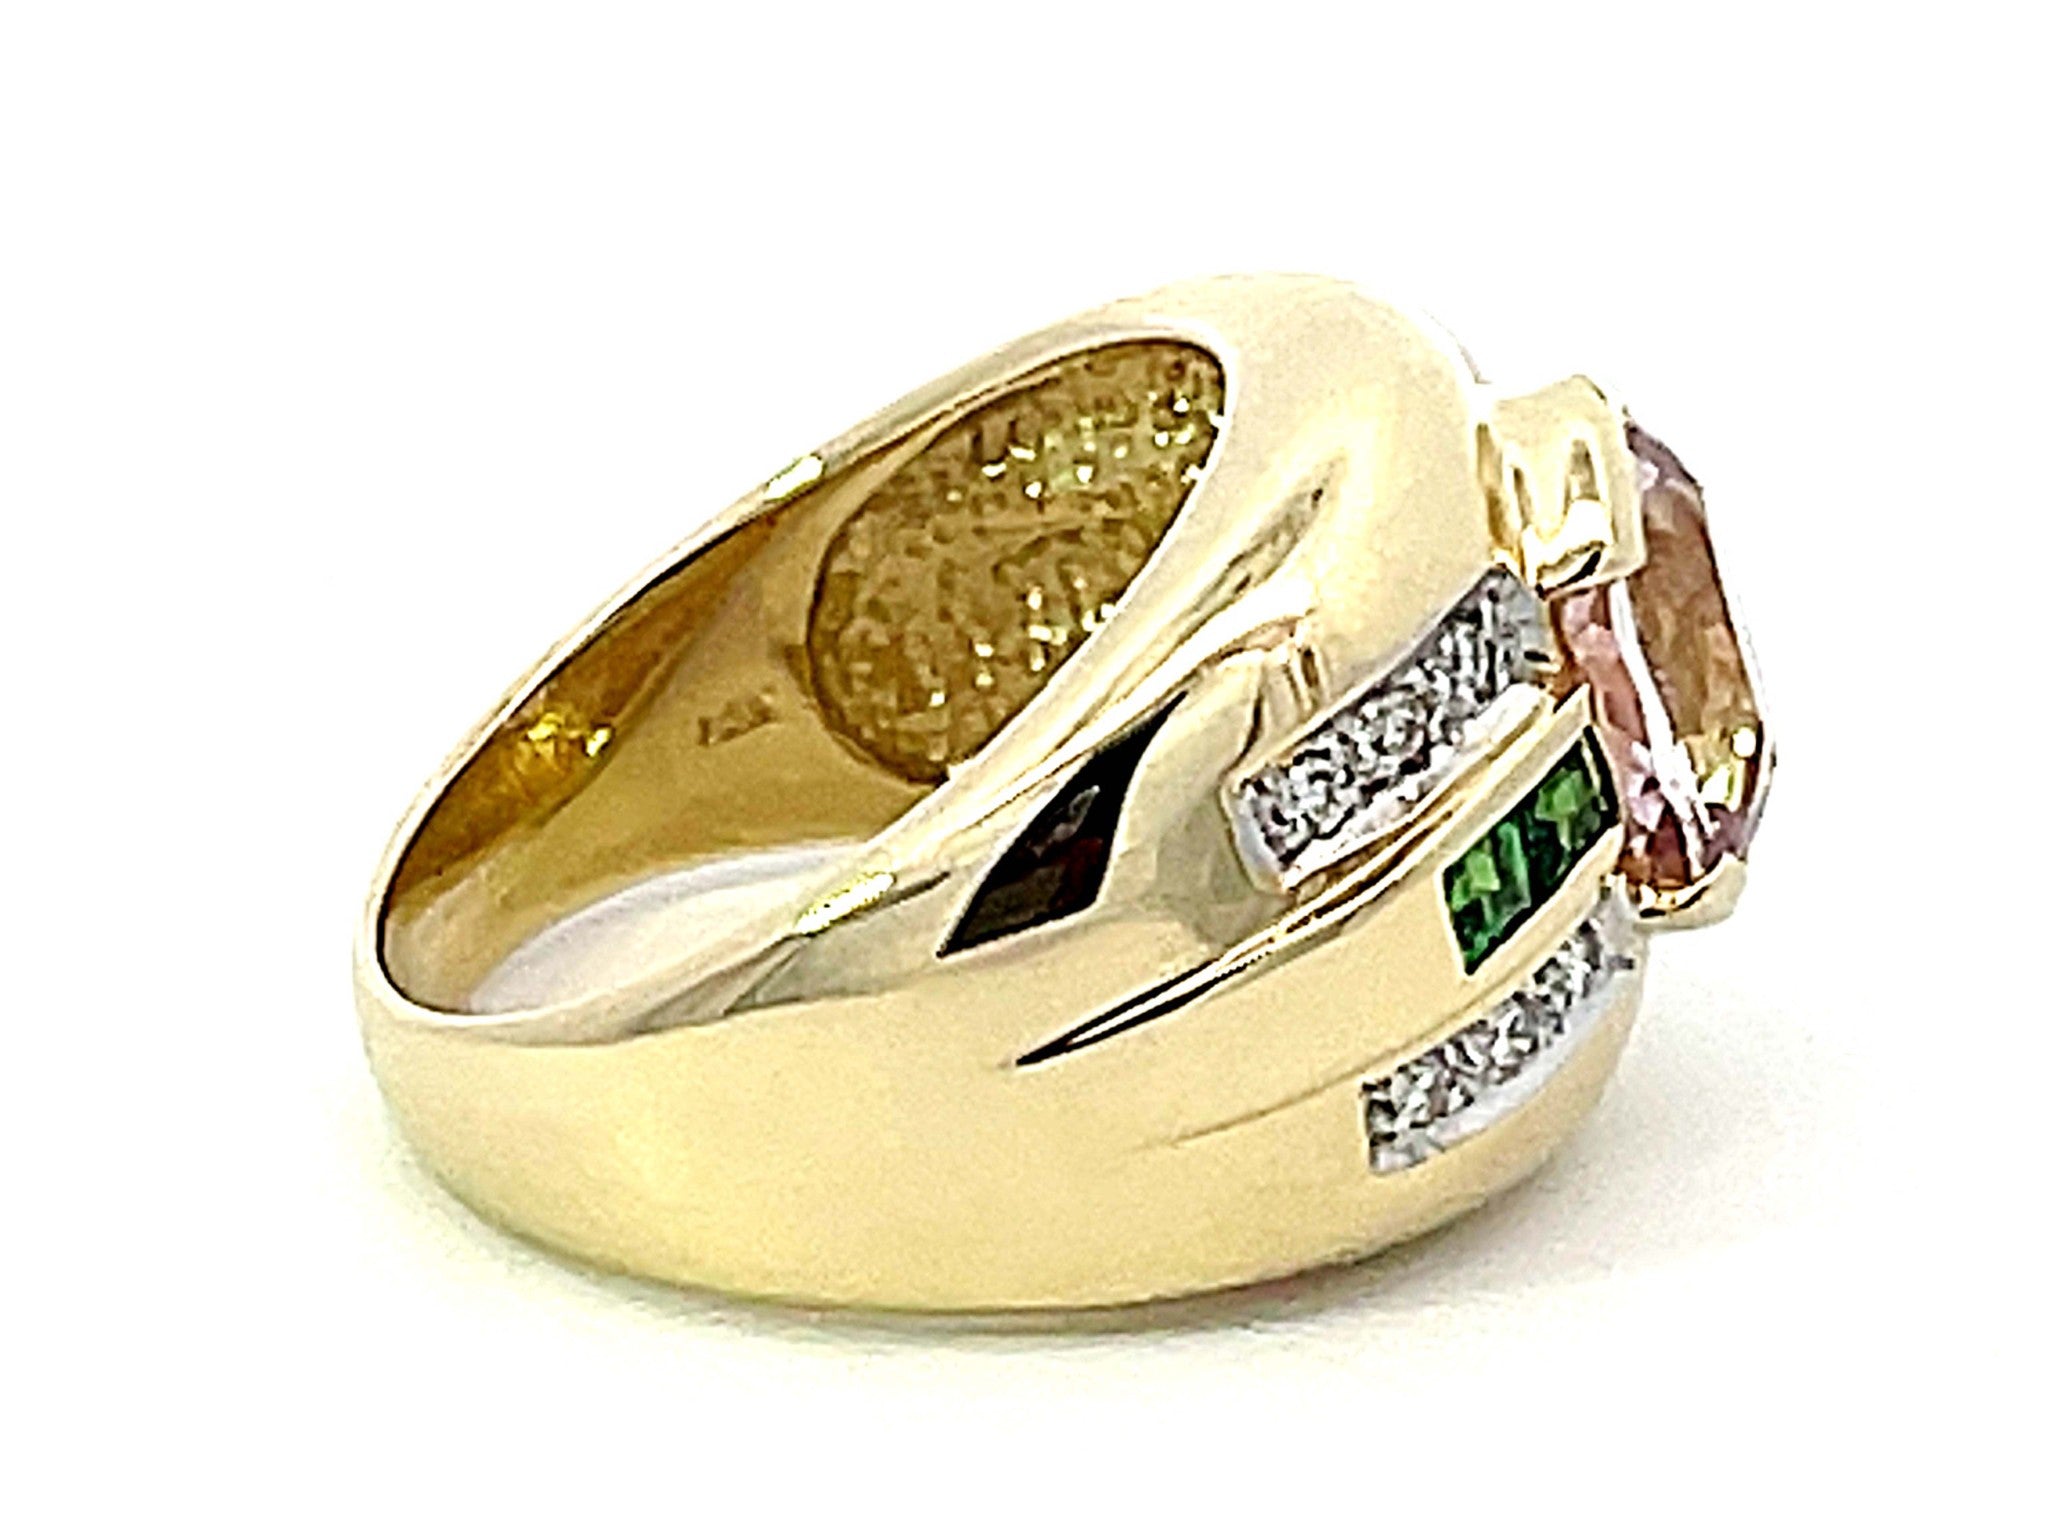 Pink Kunzite Green Tsavorite Garnet Diamond Cigar Band Ring in 14k Yellow Gold